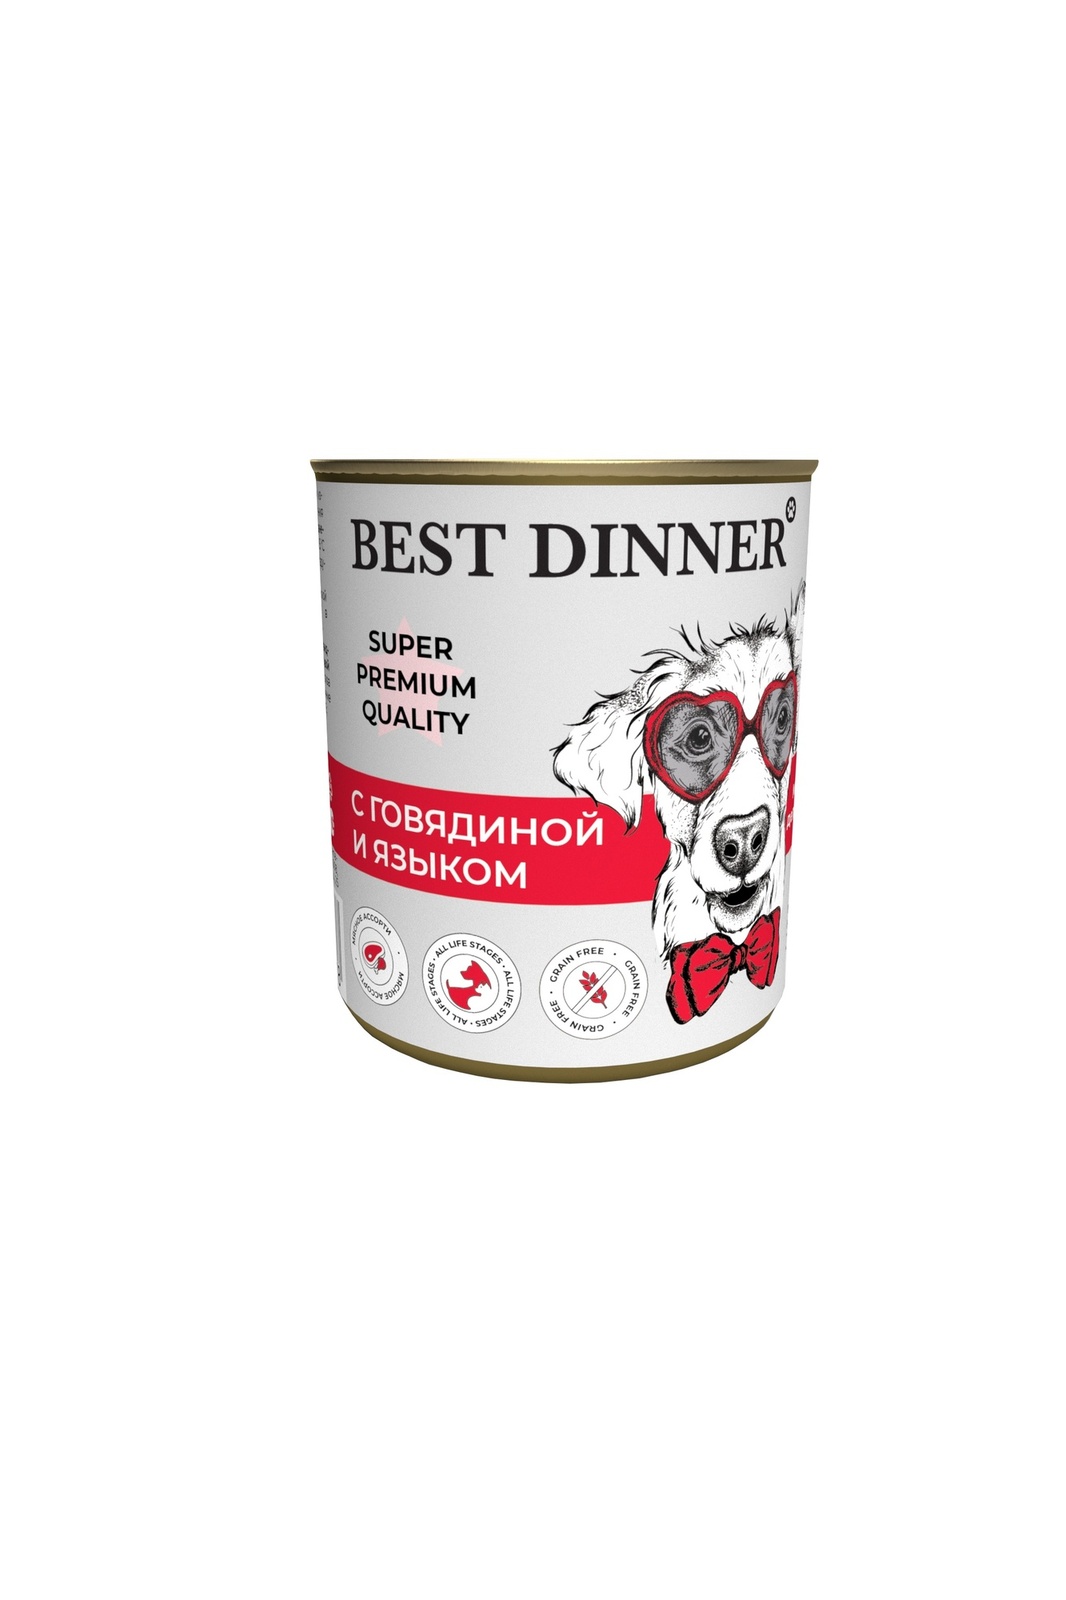 Best Dinner Best Dinner консервы для собак Super Premium С говядиной и языком (340 г) best dinner best dinner консервы для собак super premium с говядиной и языком 340 г